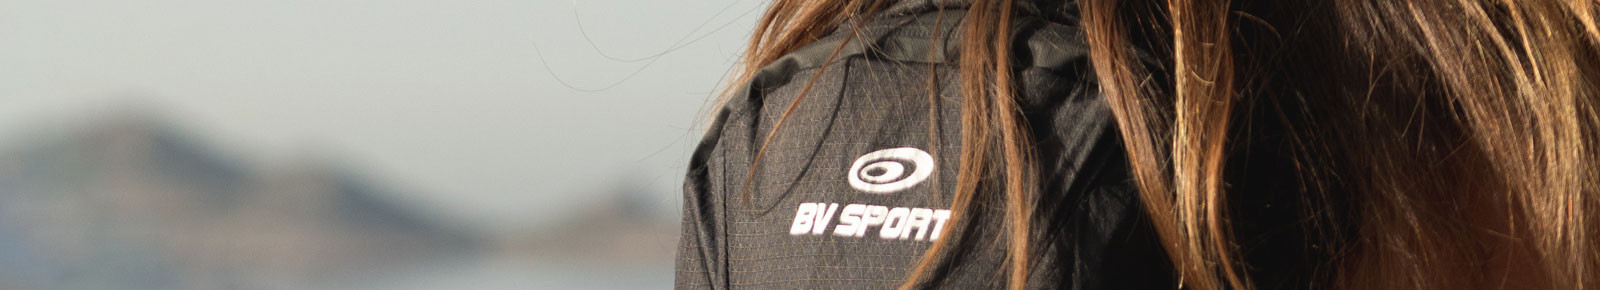 BV SPORT | Accessoires de sport, Running, Trail, Multisports